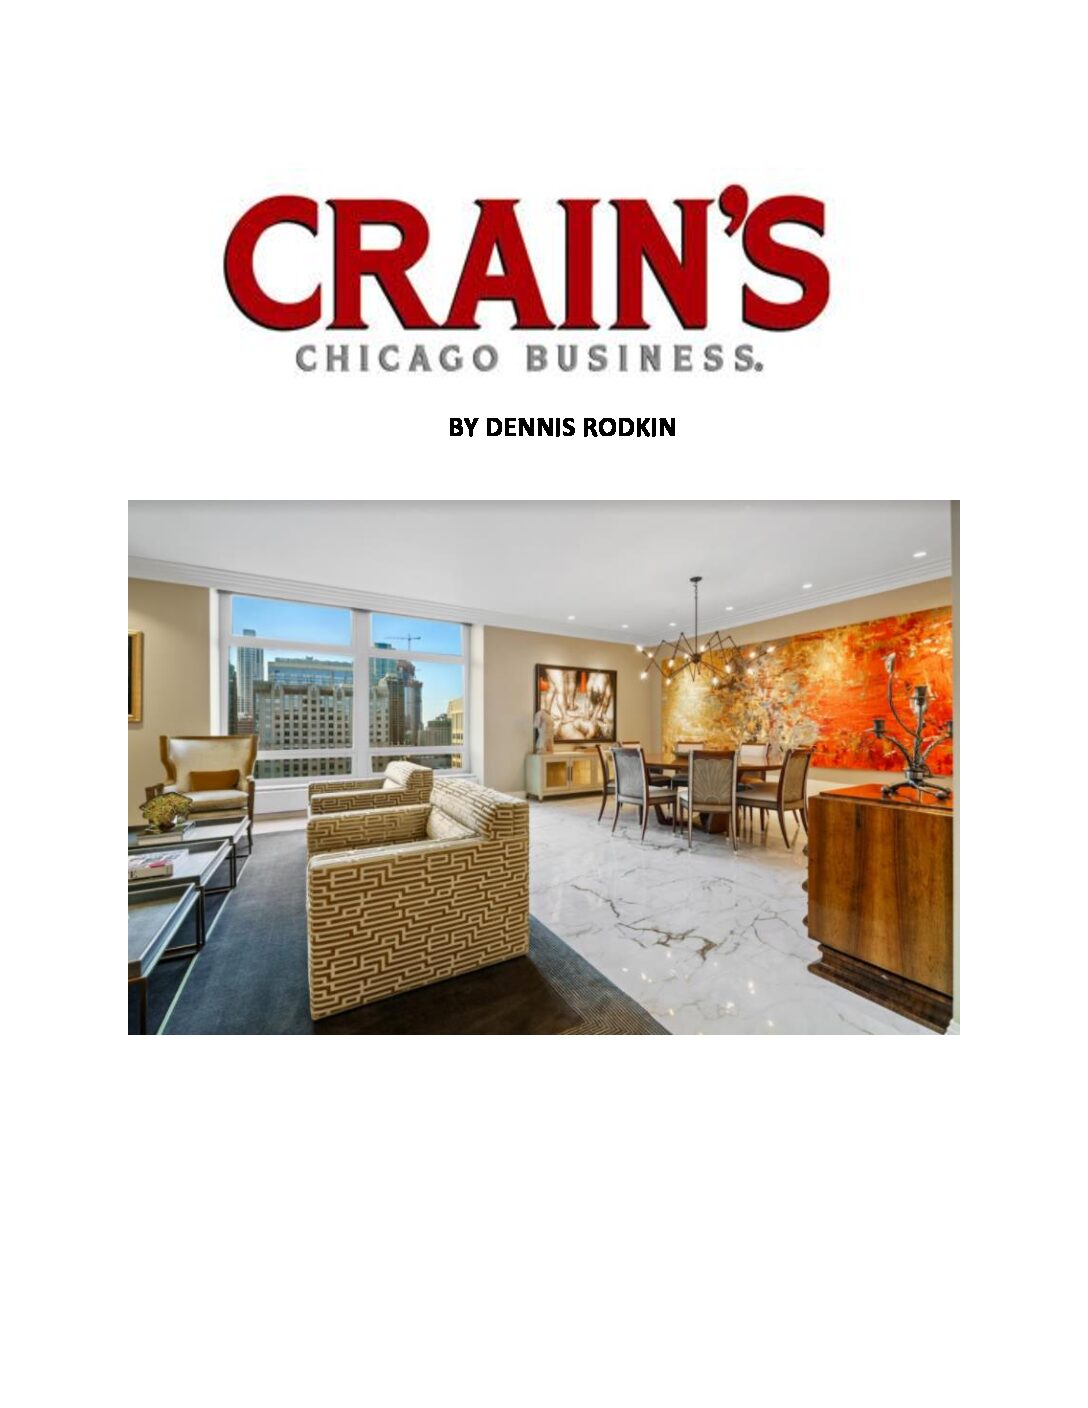 CRAIN’S CHICAGO BUSINESS